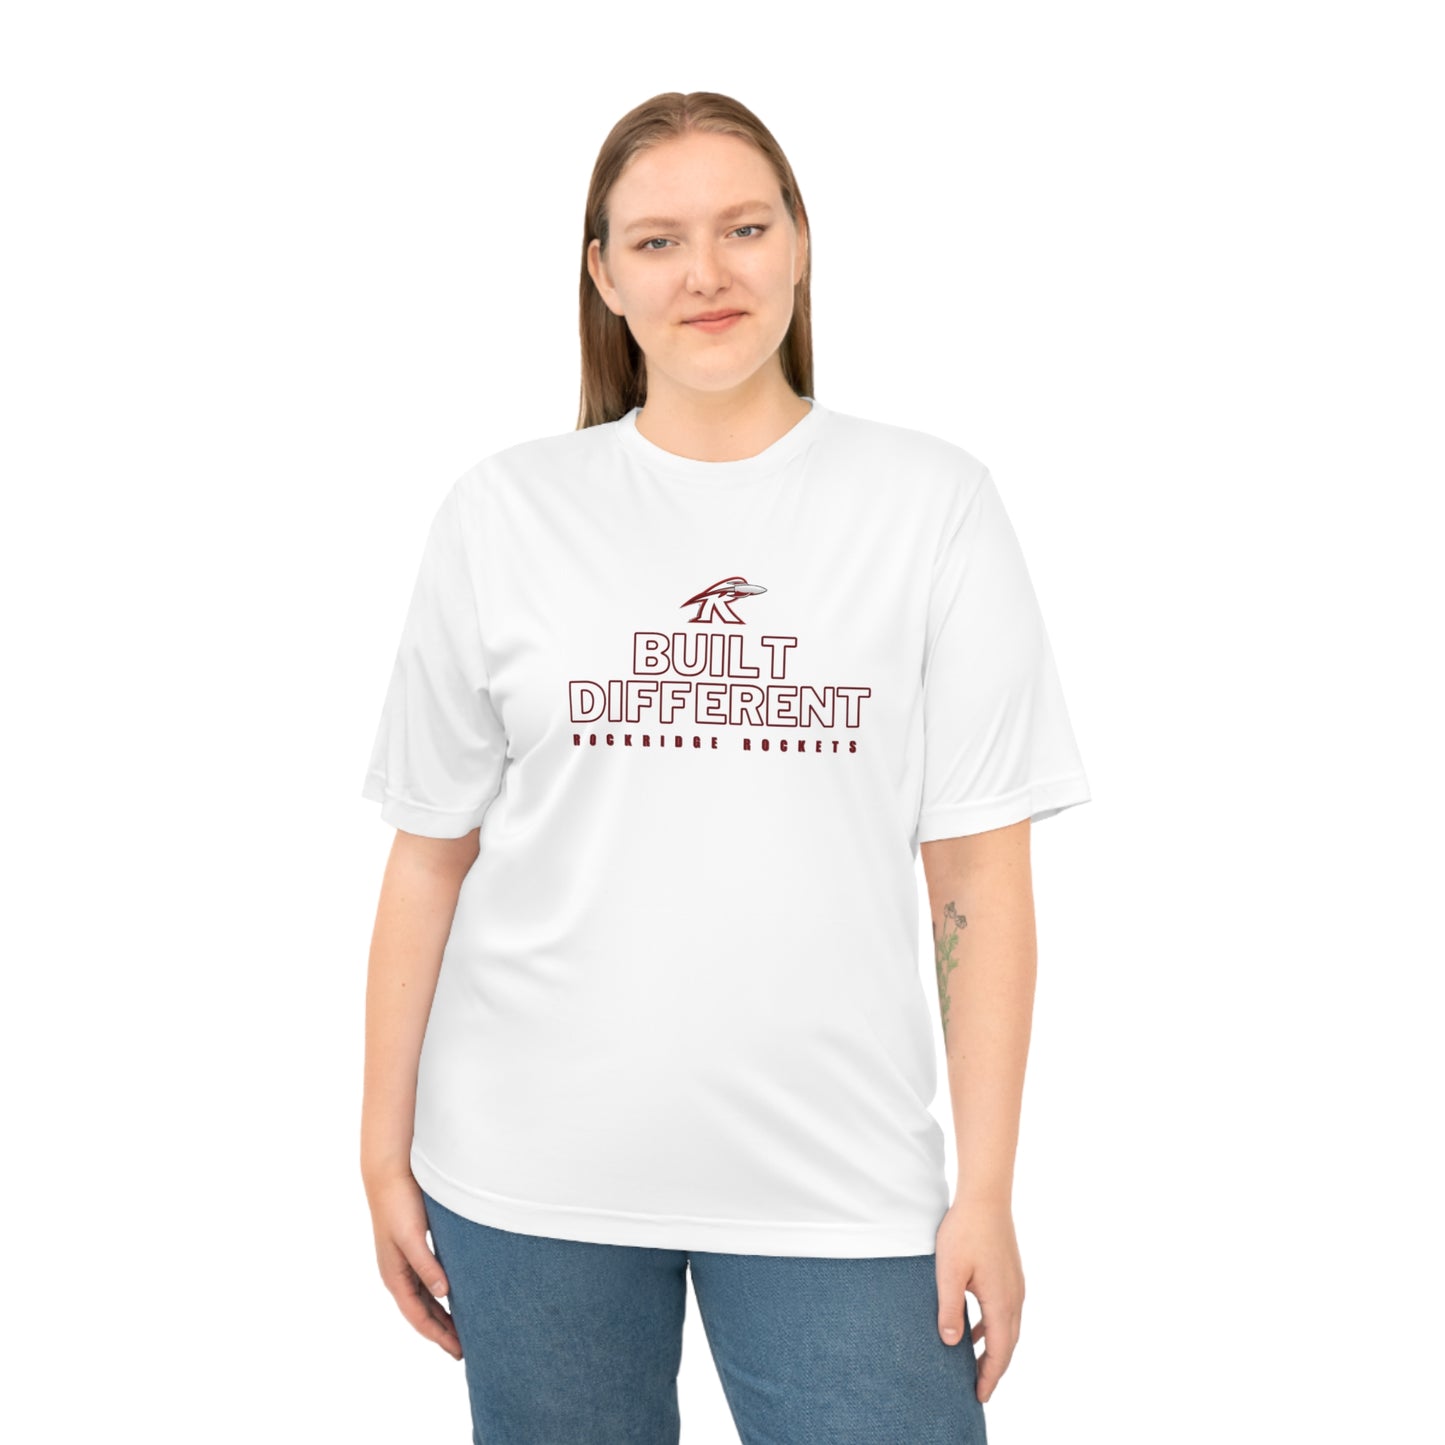 Built Different, Rockridge Rockets - Unisex Zone Performance T-shirt